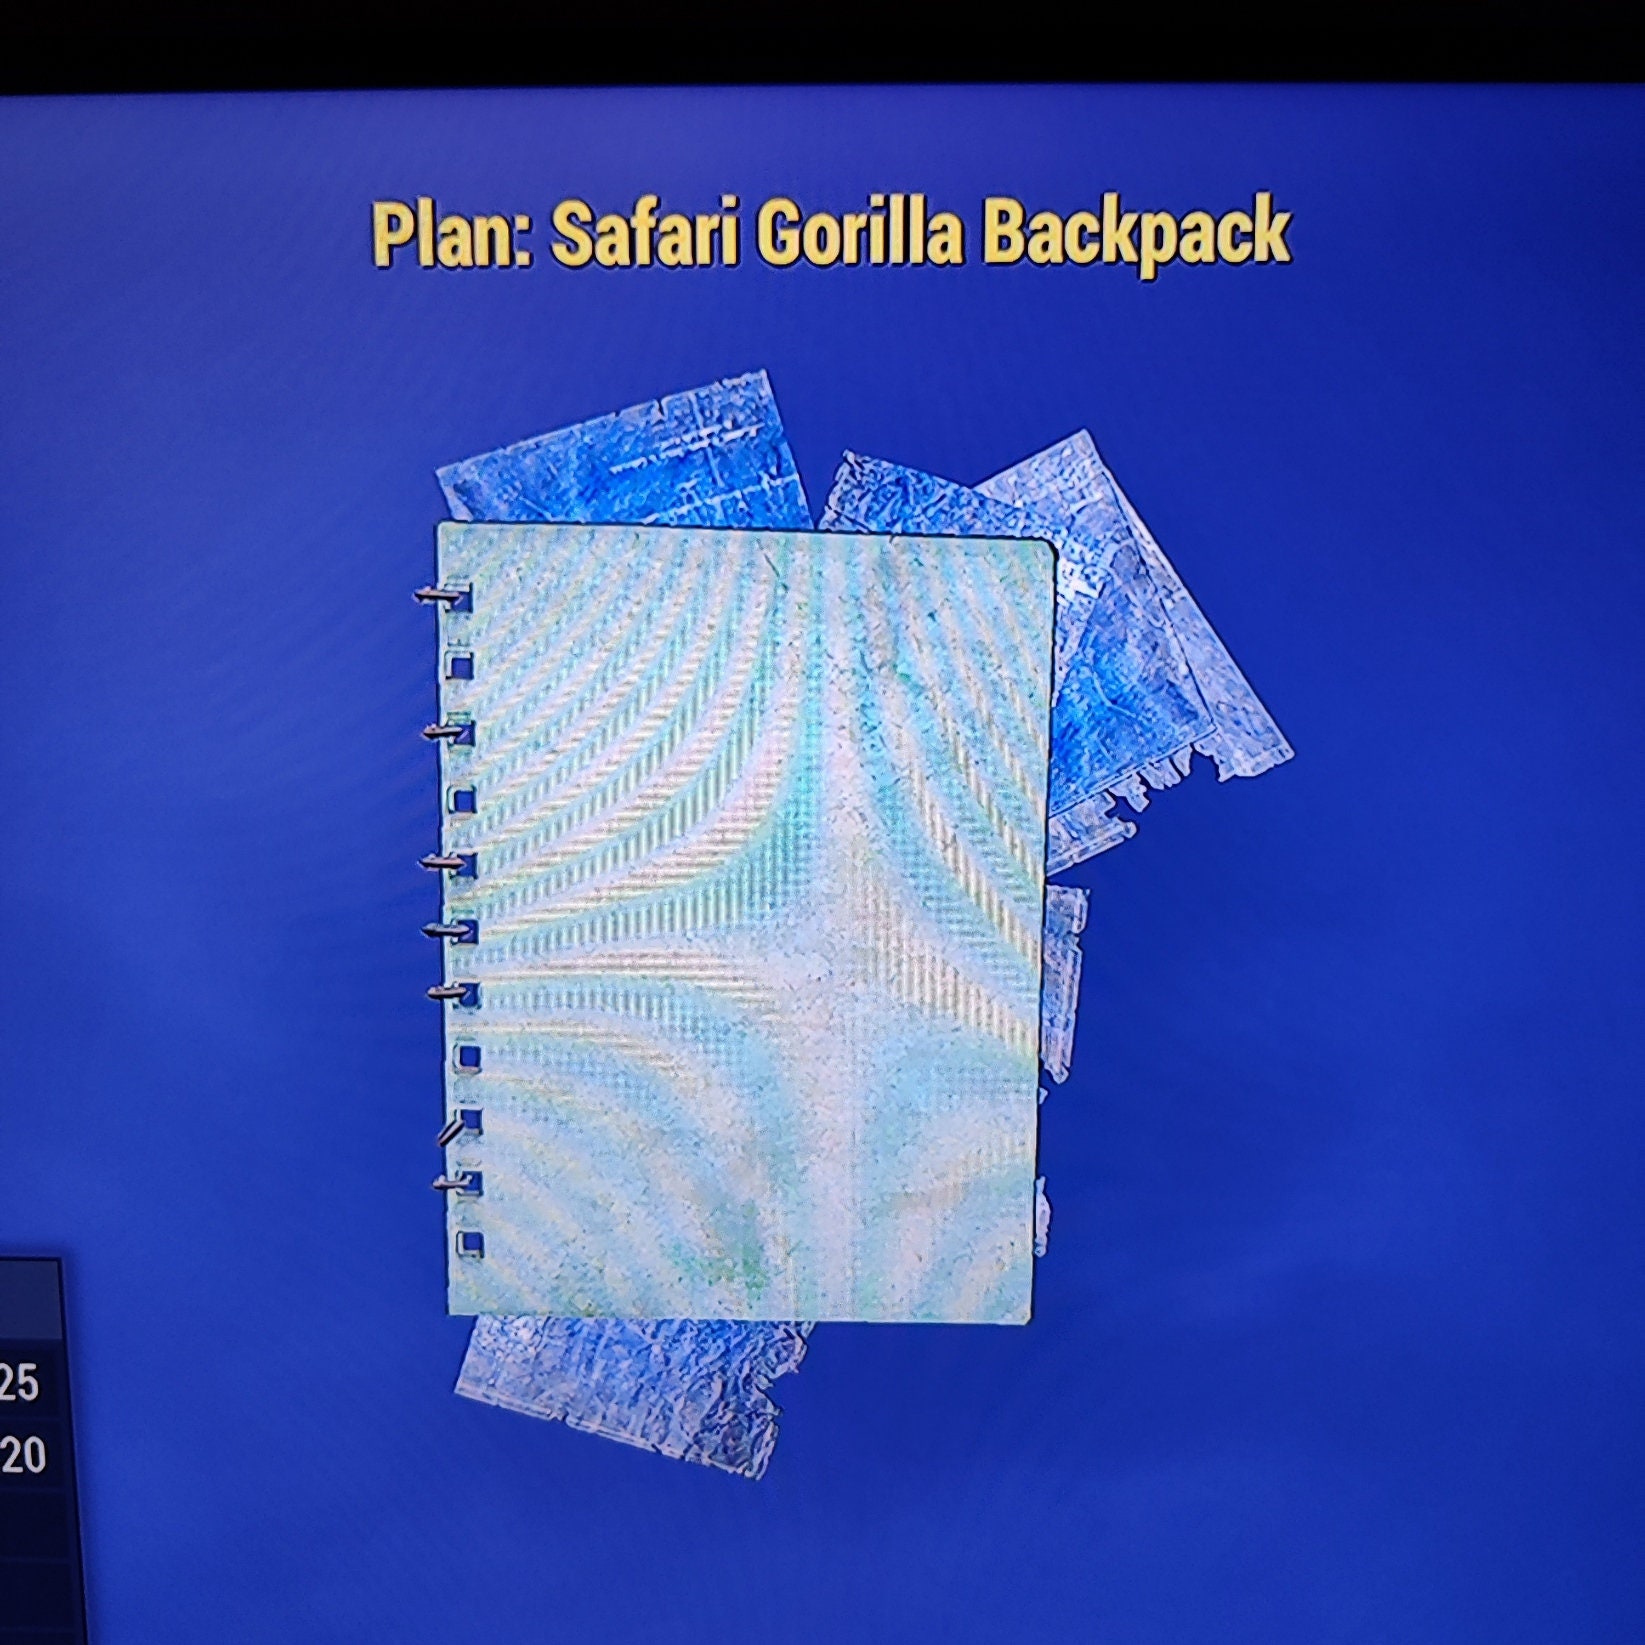 safari gorilla backpack fallout 76 price